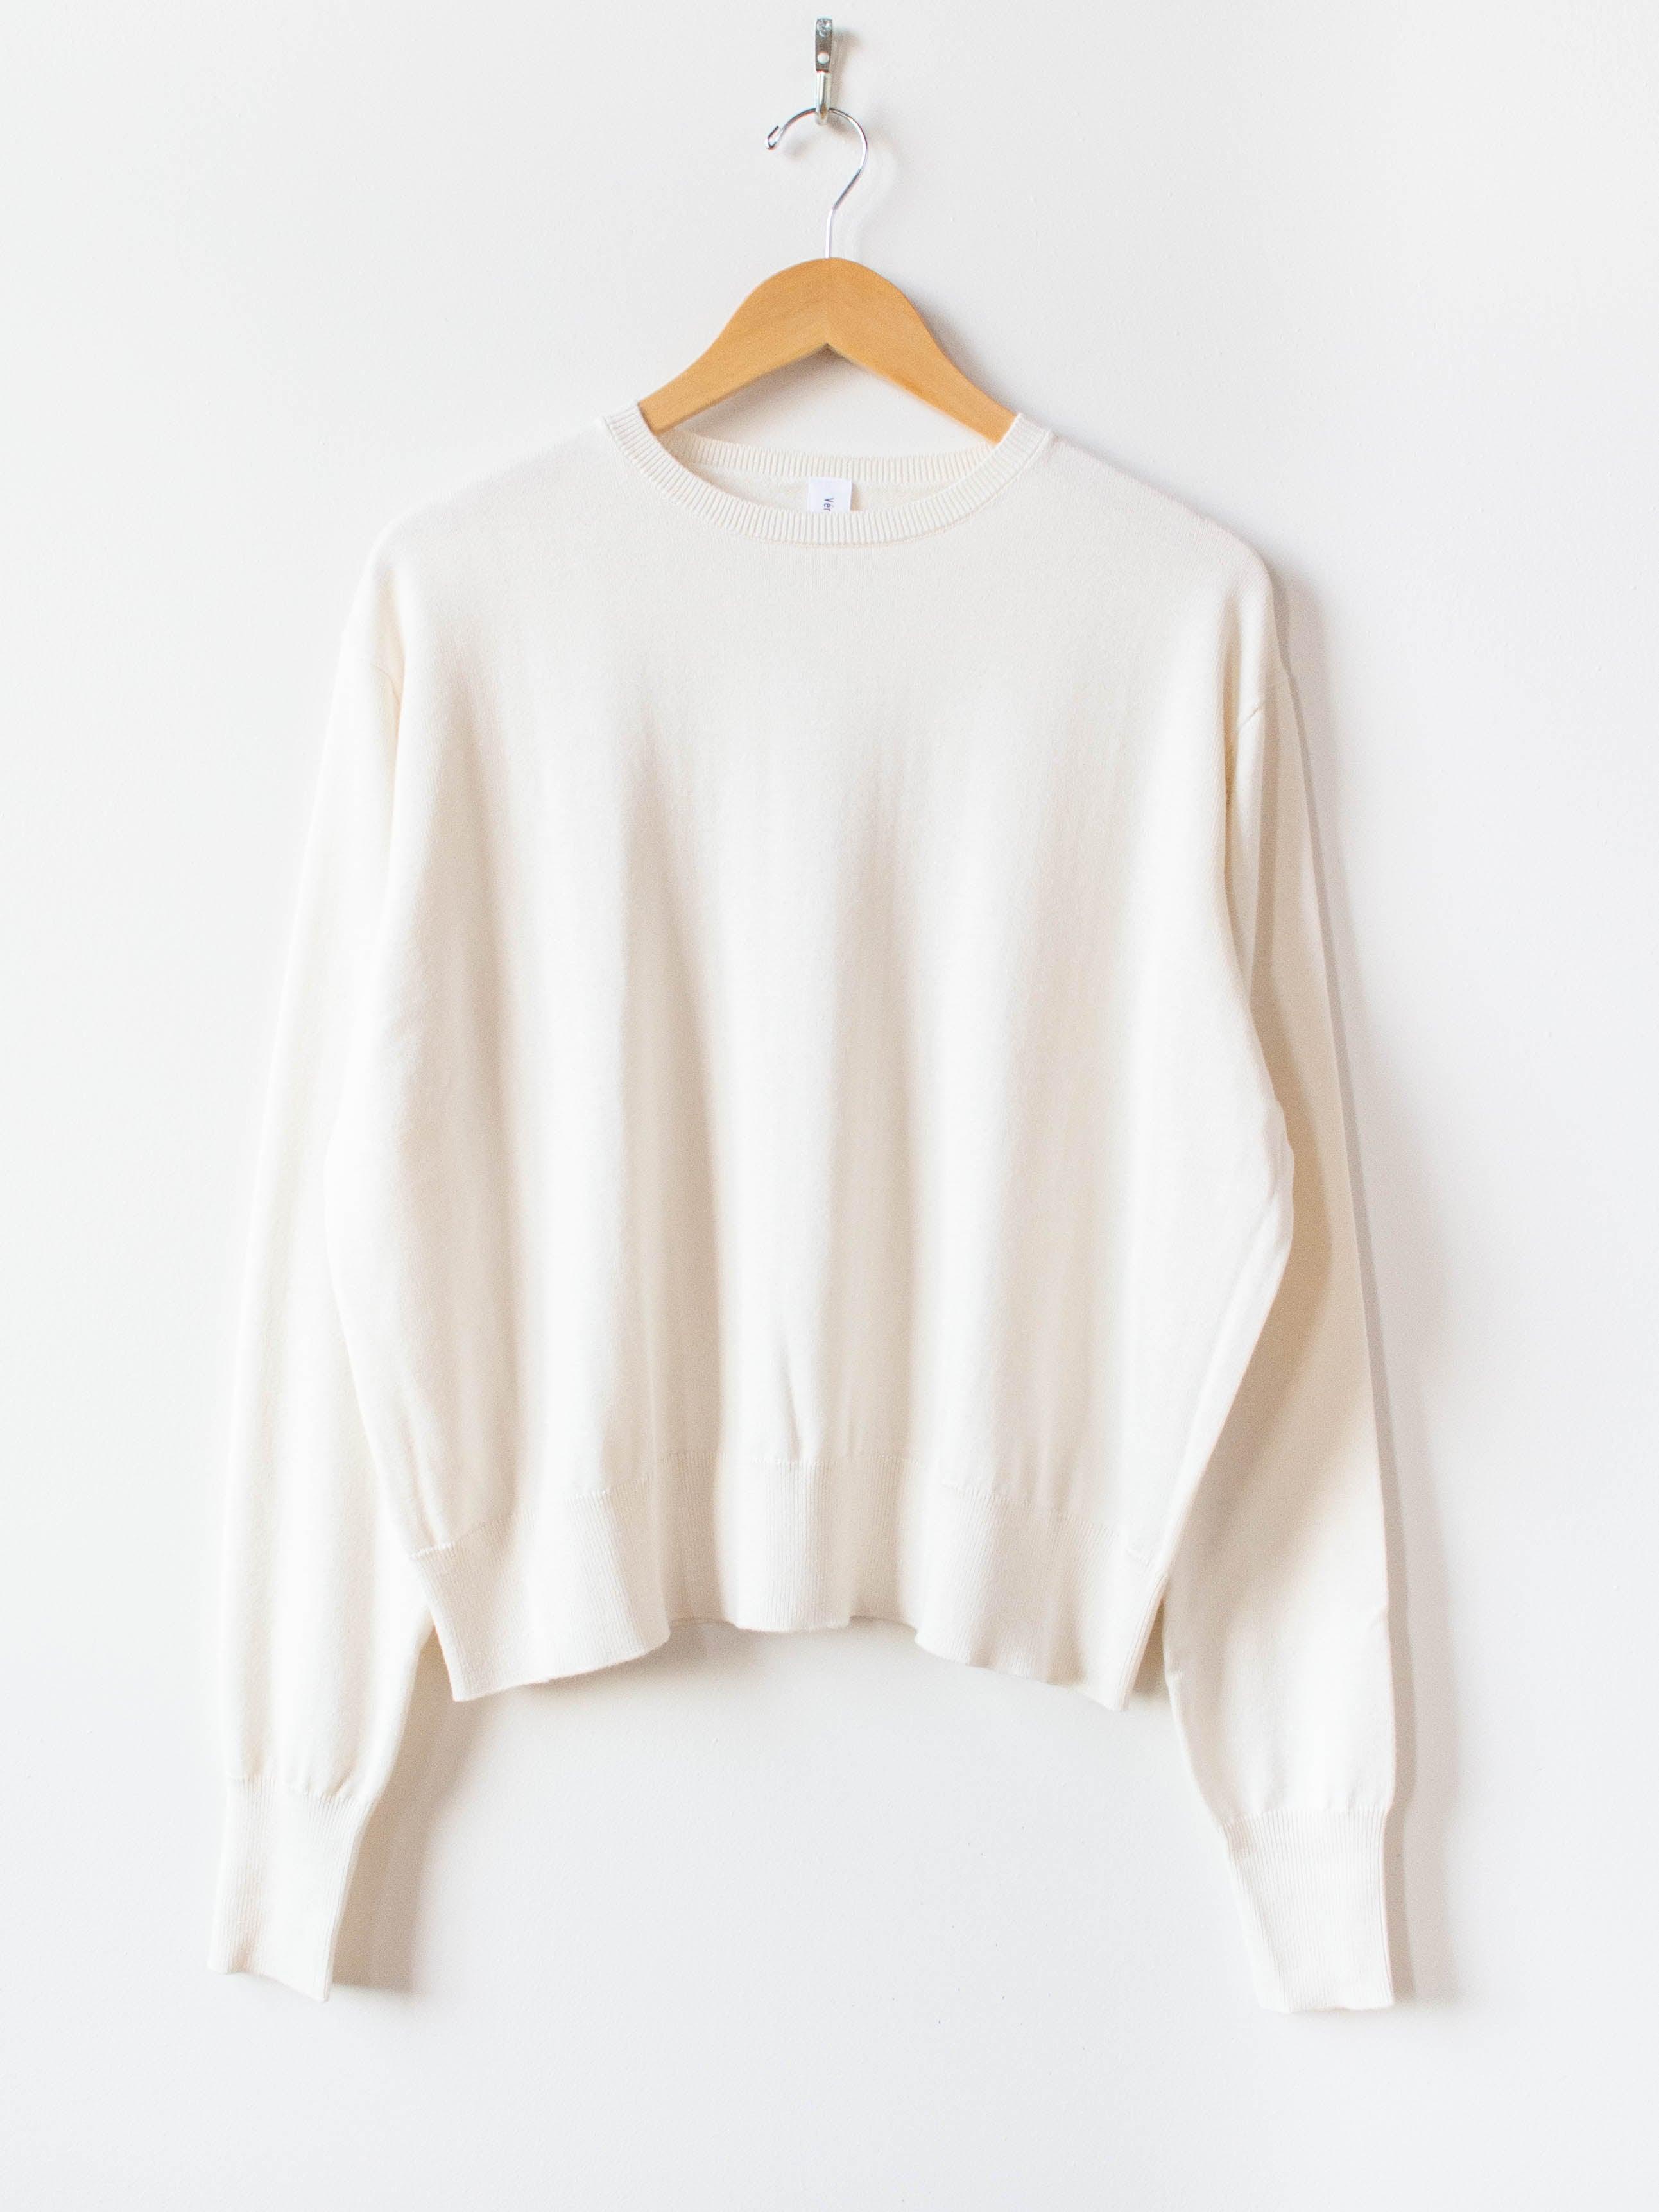 Namu Shop - Veritecoeur Co / Silk / Cashmere Crewneck Knit - White